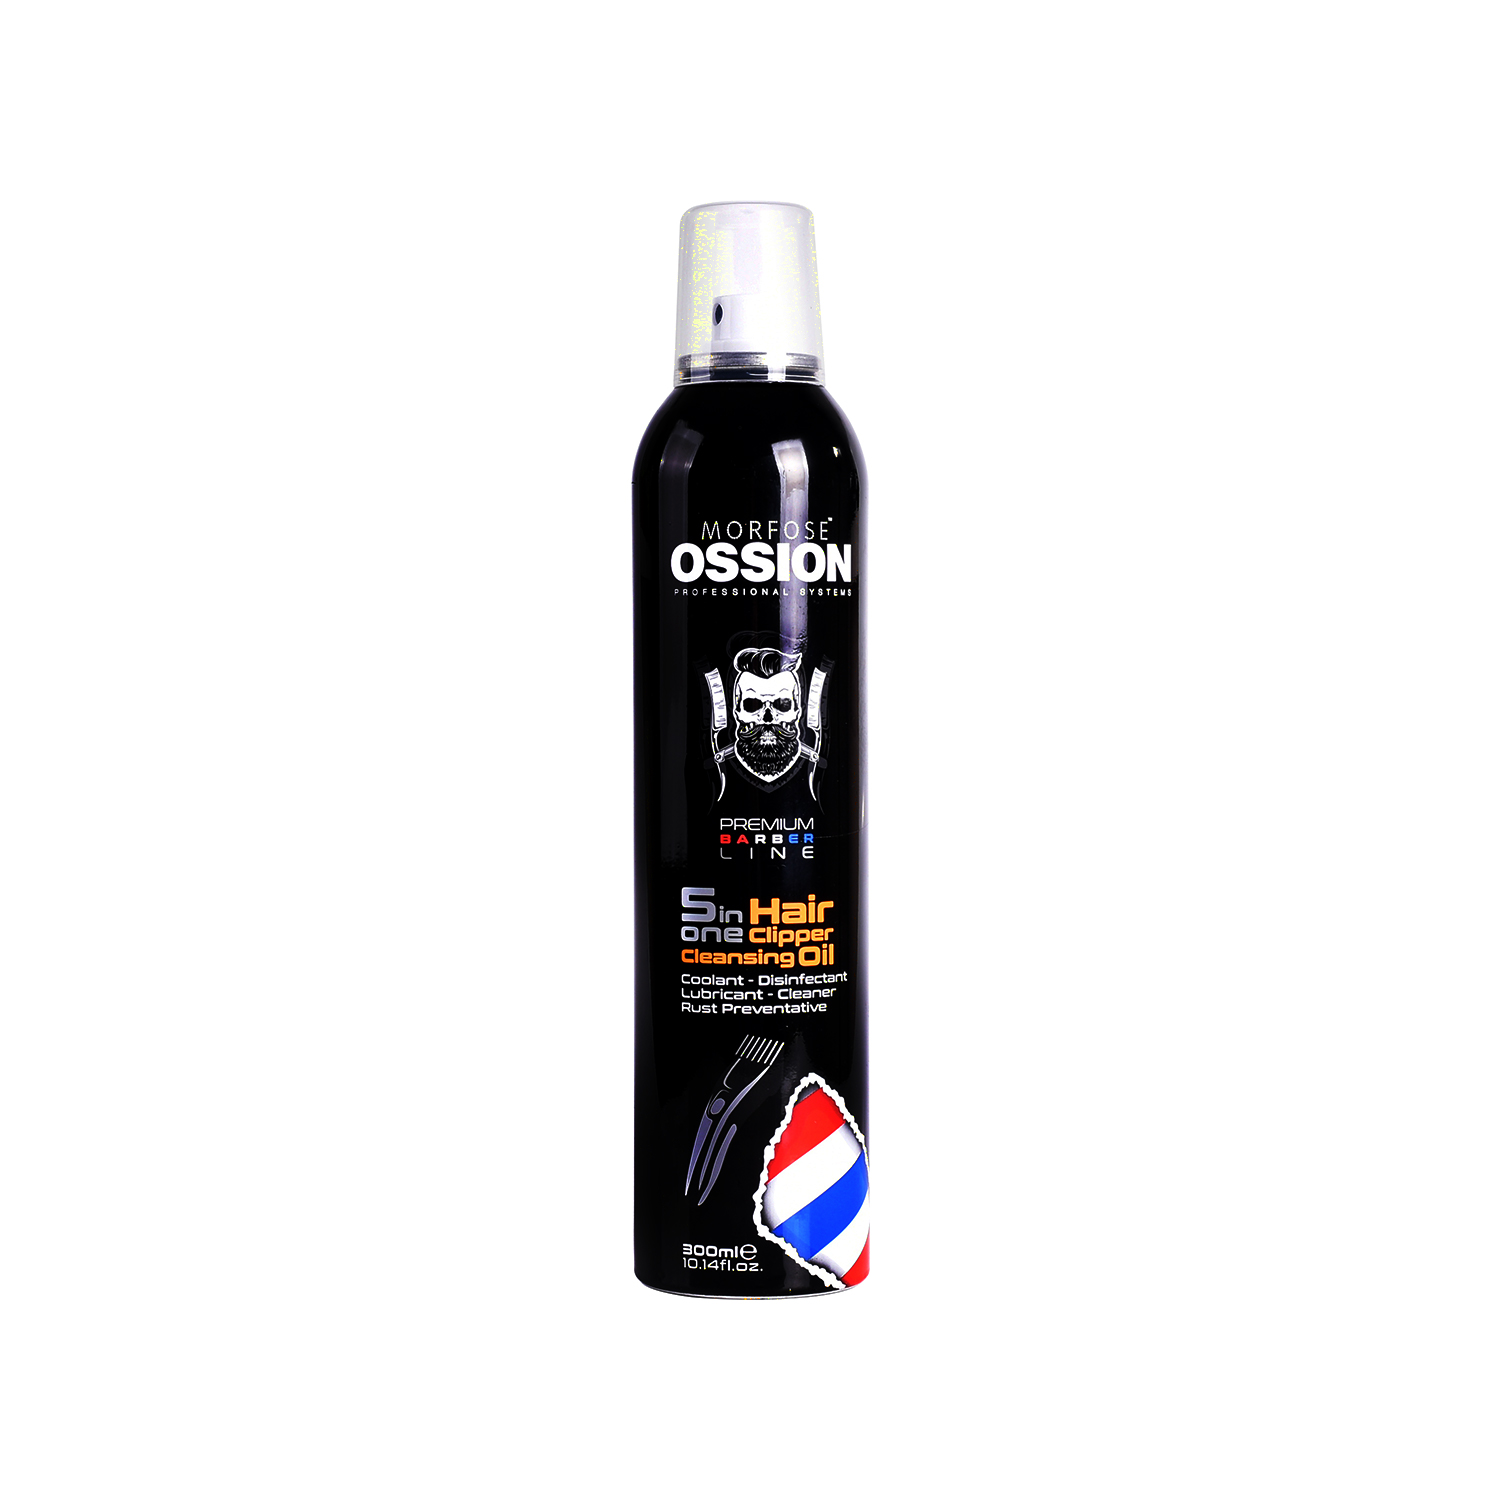 spray oil for hair clippers